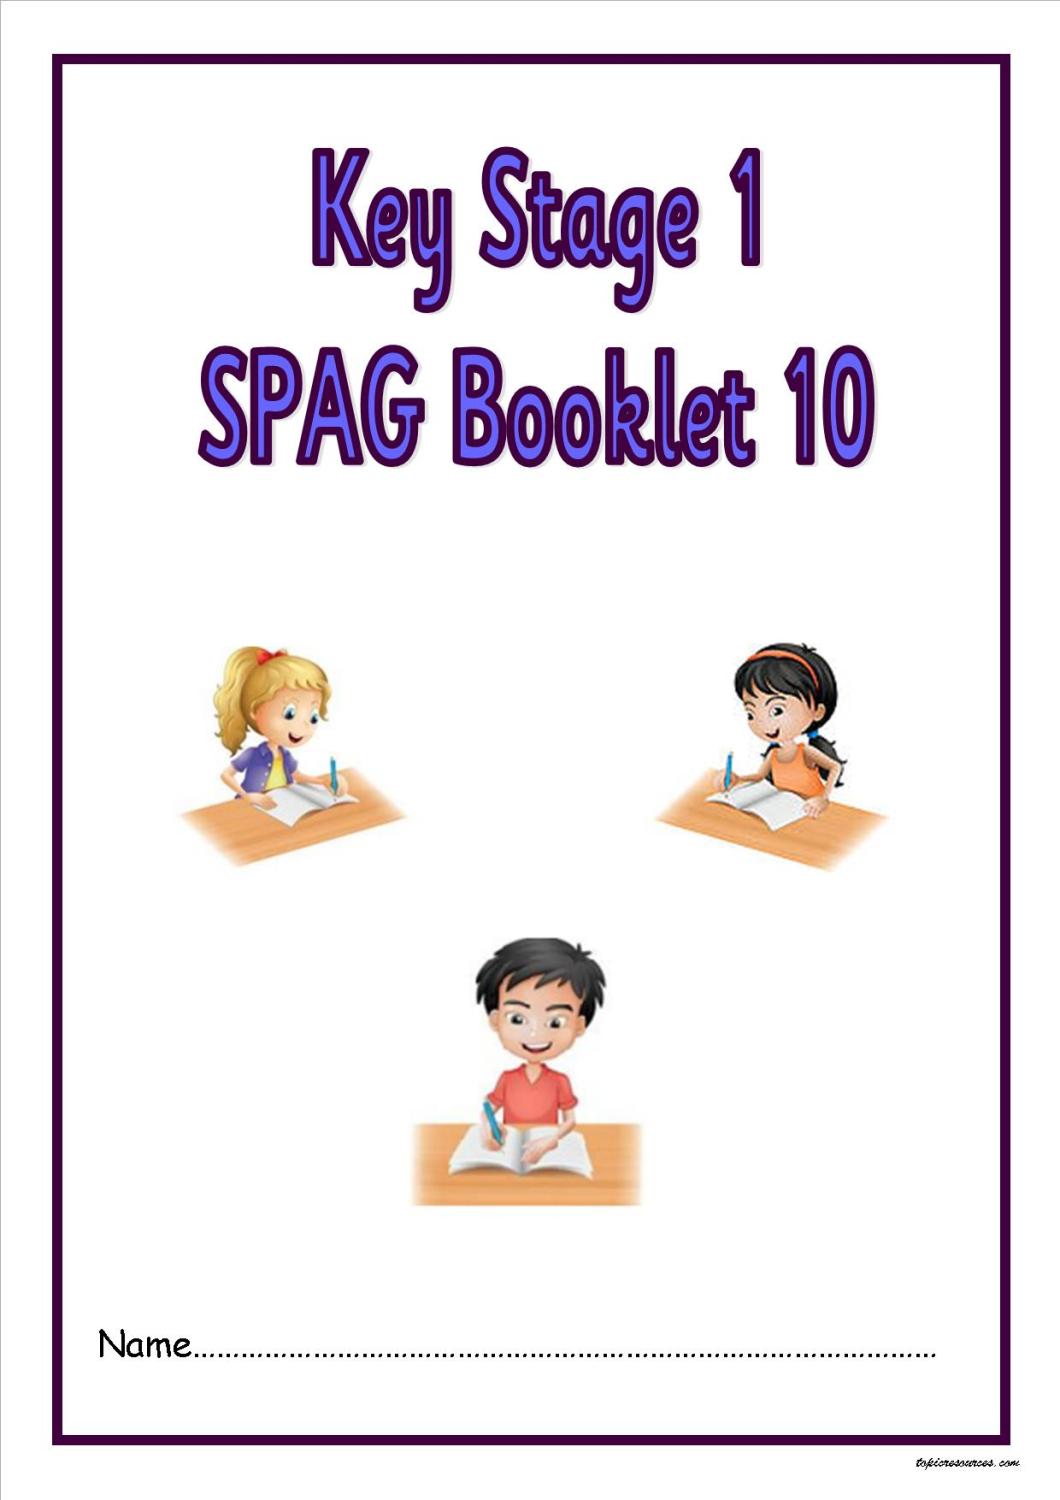 SPAG activity booklet for KS1 children